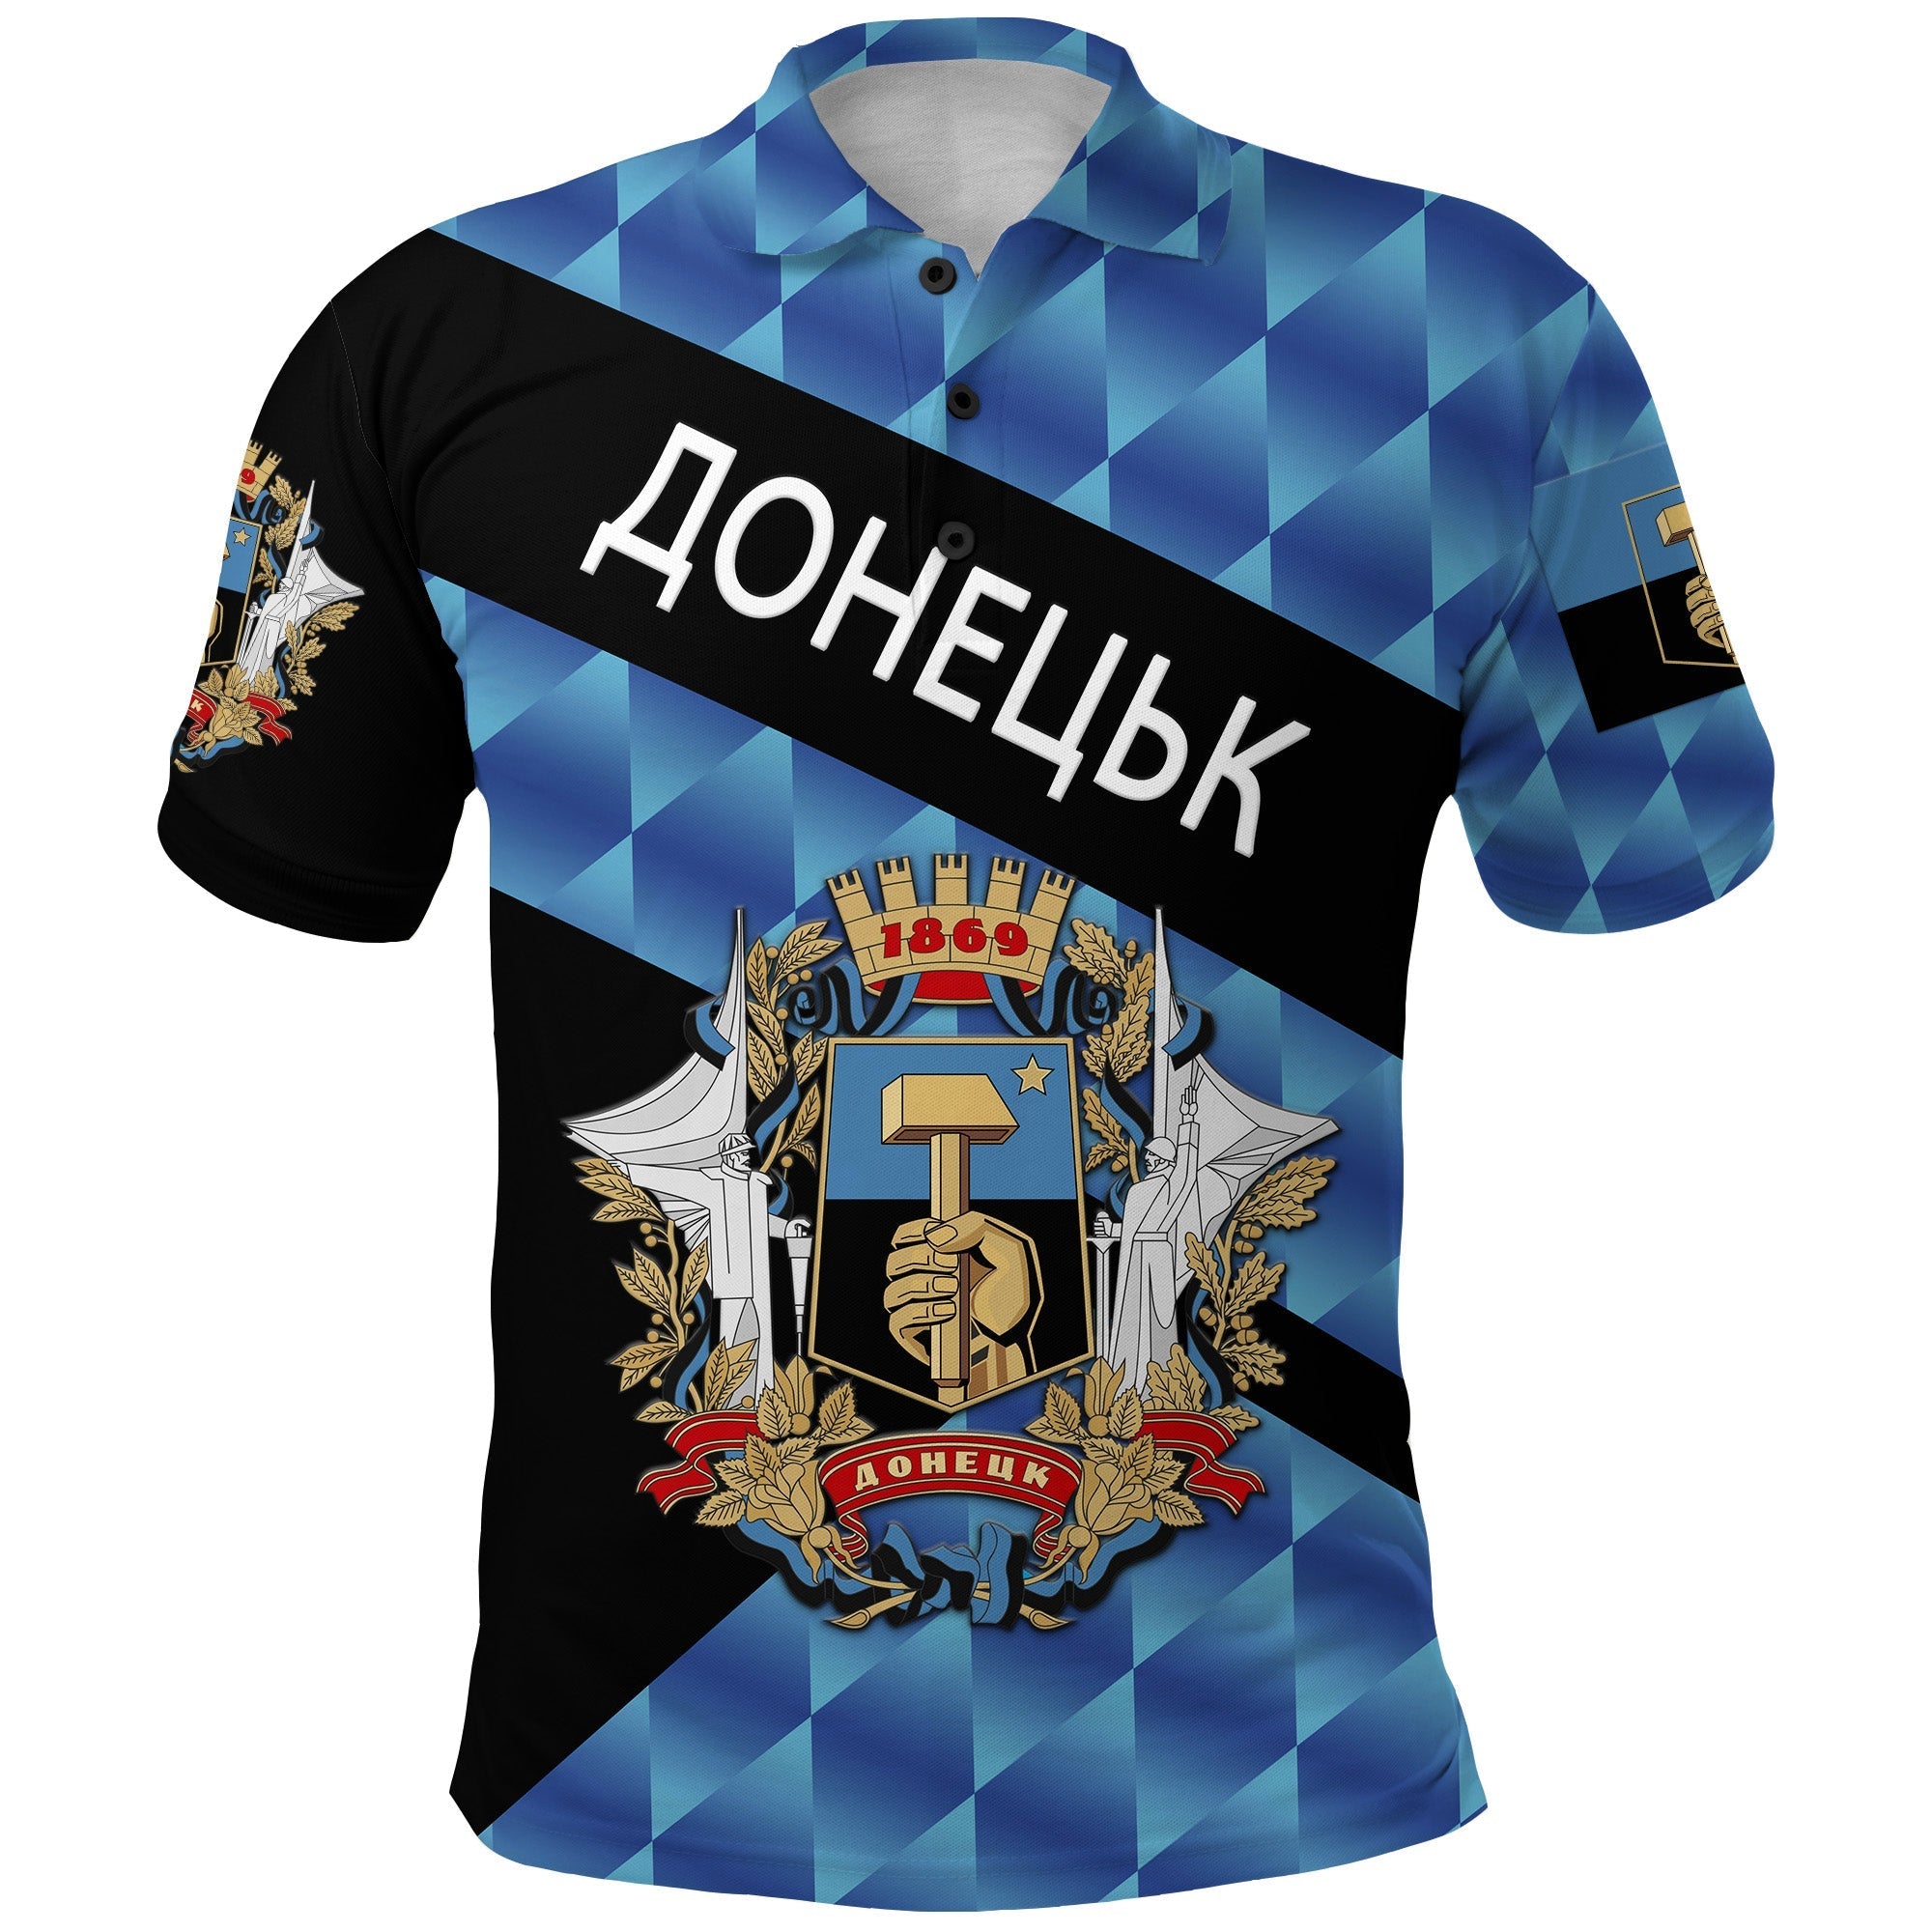 ukraine-donetsk-polo-shirt-sporty-style